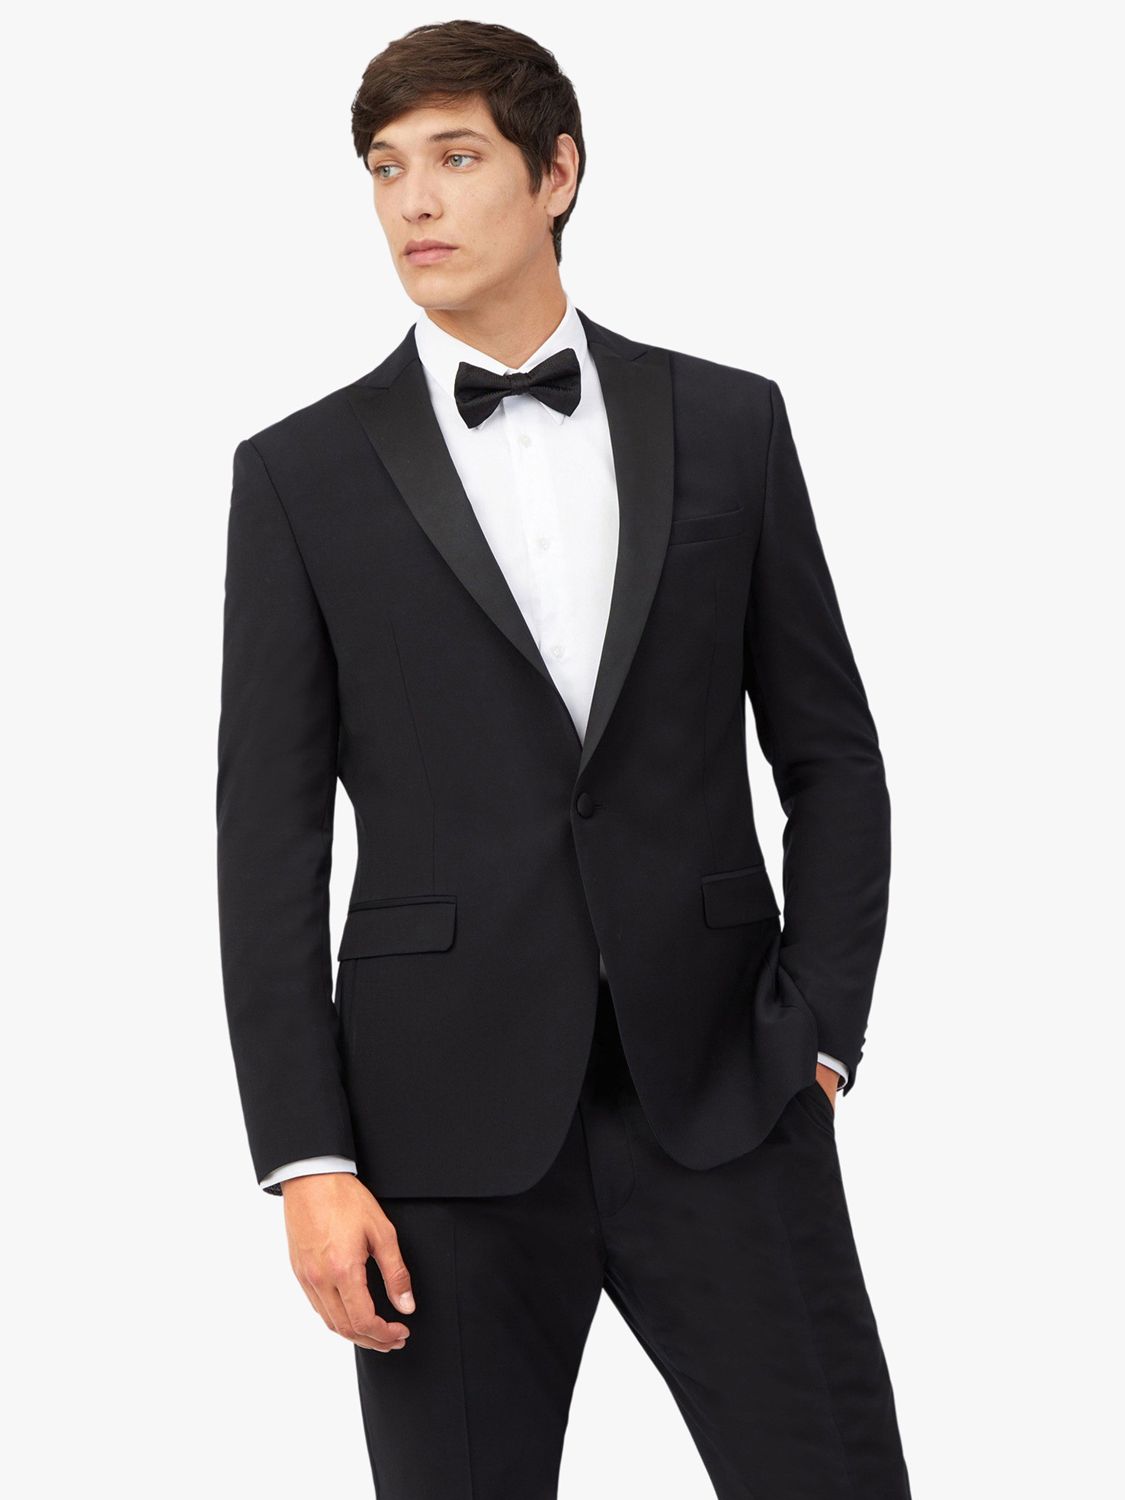 Ted Baker Wool Blend Tuxedo Suit Jacket, 290 Black, 44S